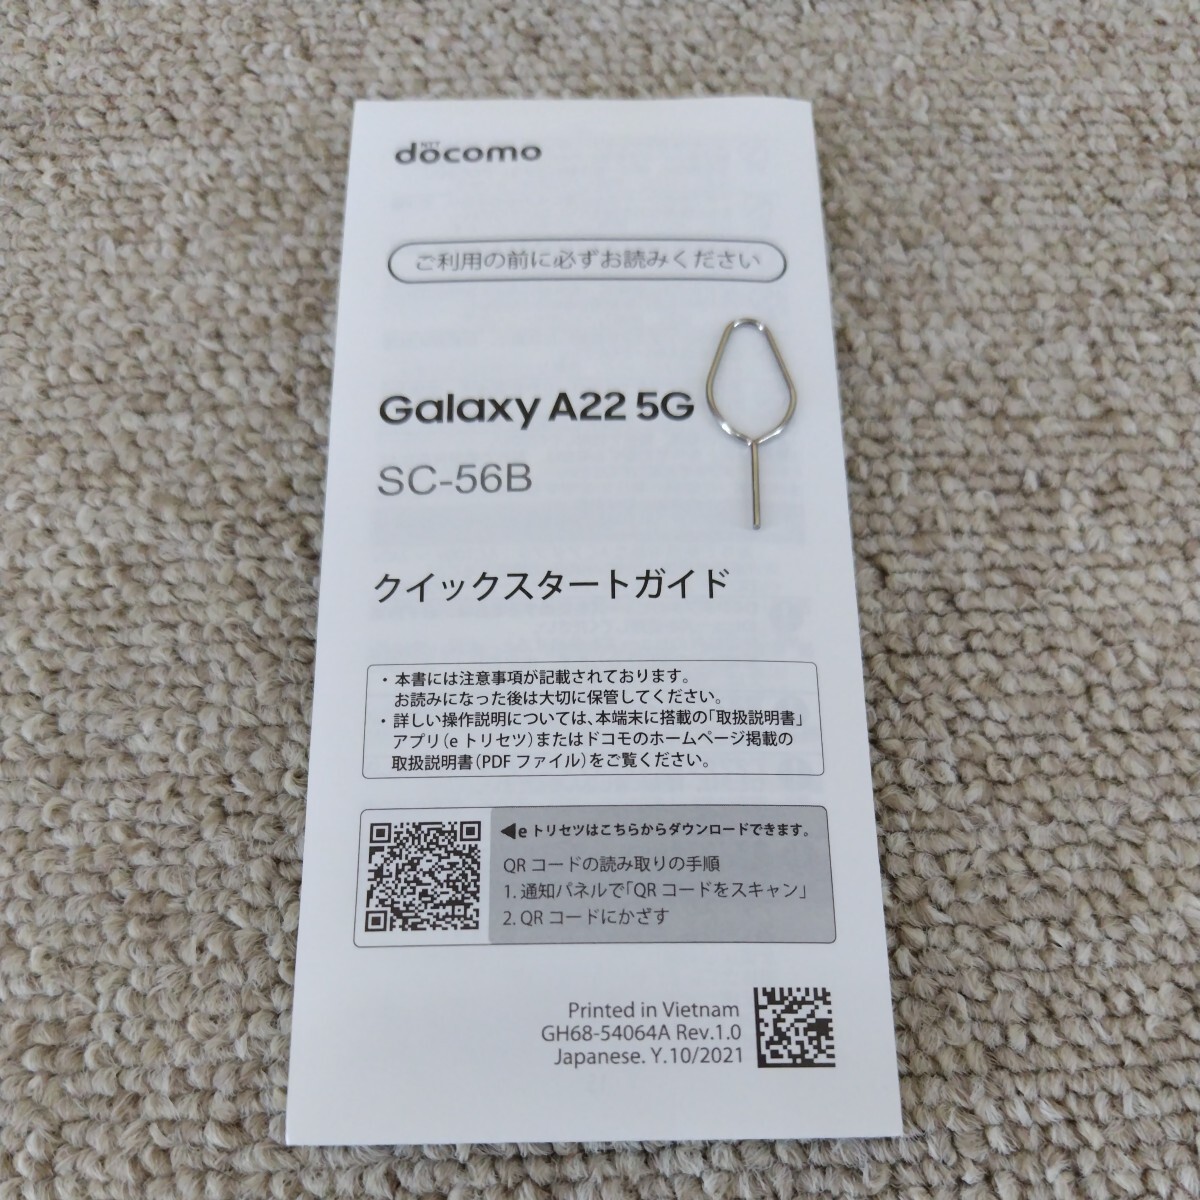 Galaxy A22 5G OCN SIMフリー 64GB SC-56B ブラック スマホ Android 黒 美品 中古品_画像4